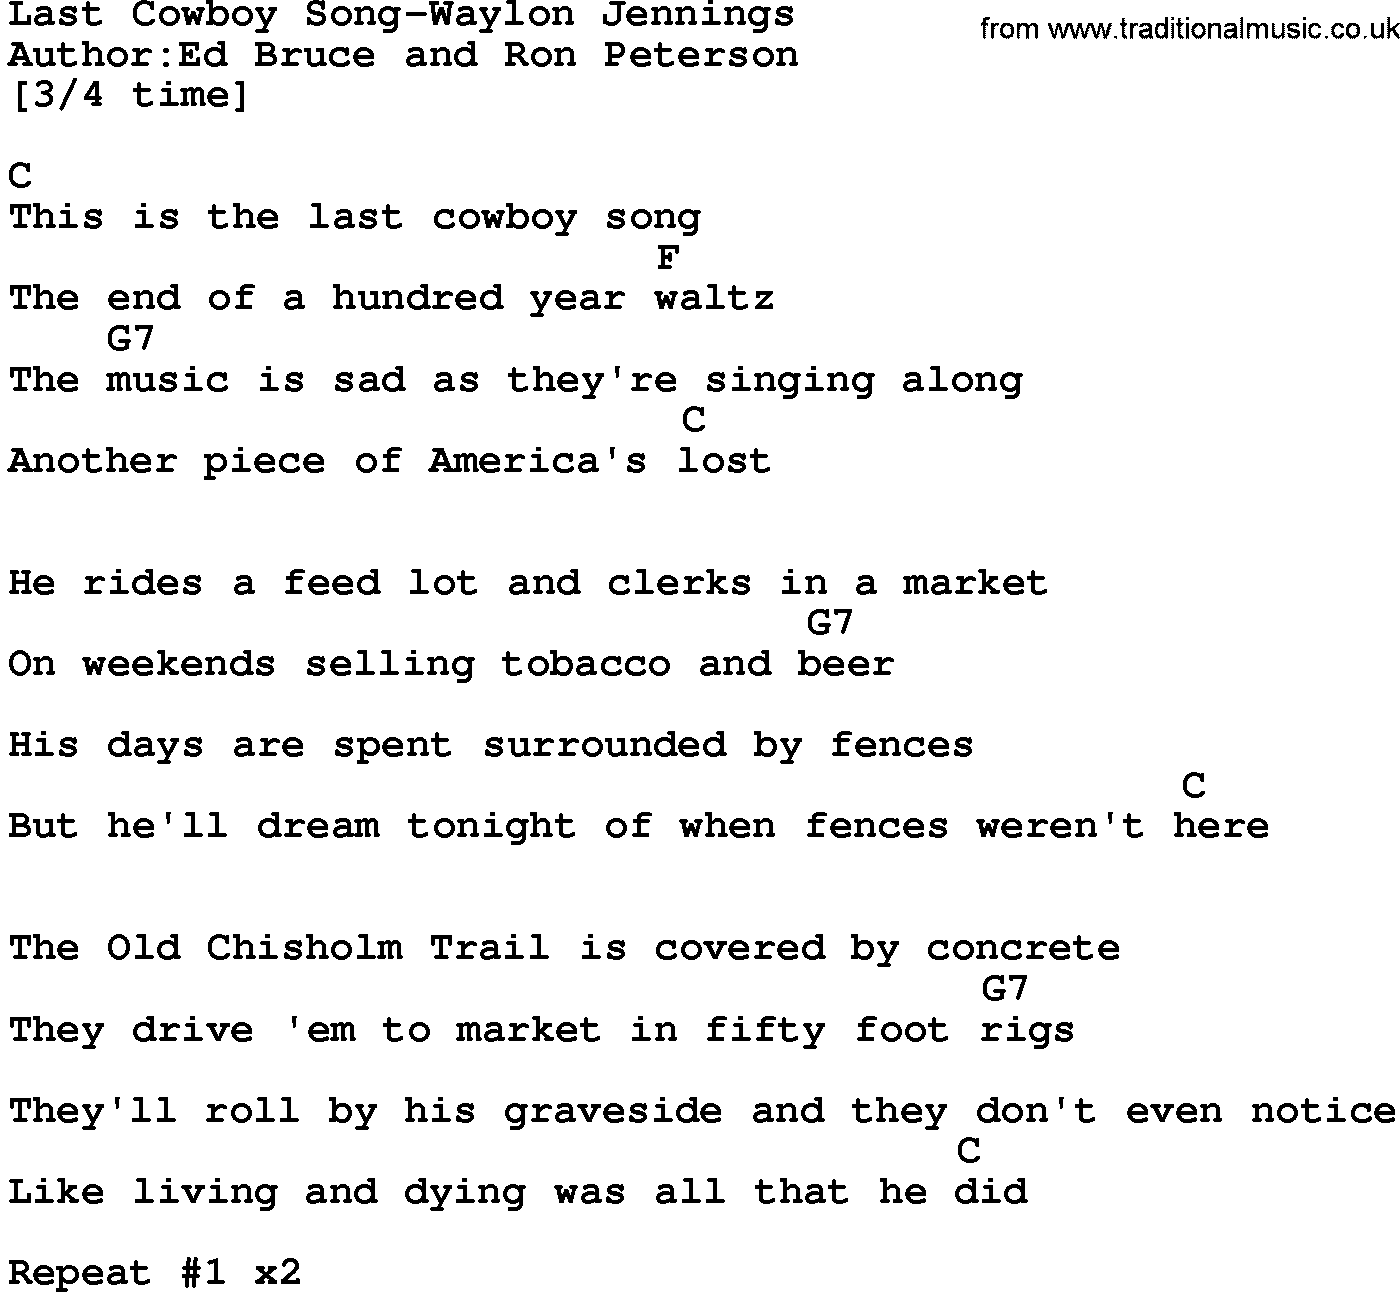 Country music song: Last Cowboy Song-Waylon Jennings lyrics and chords